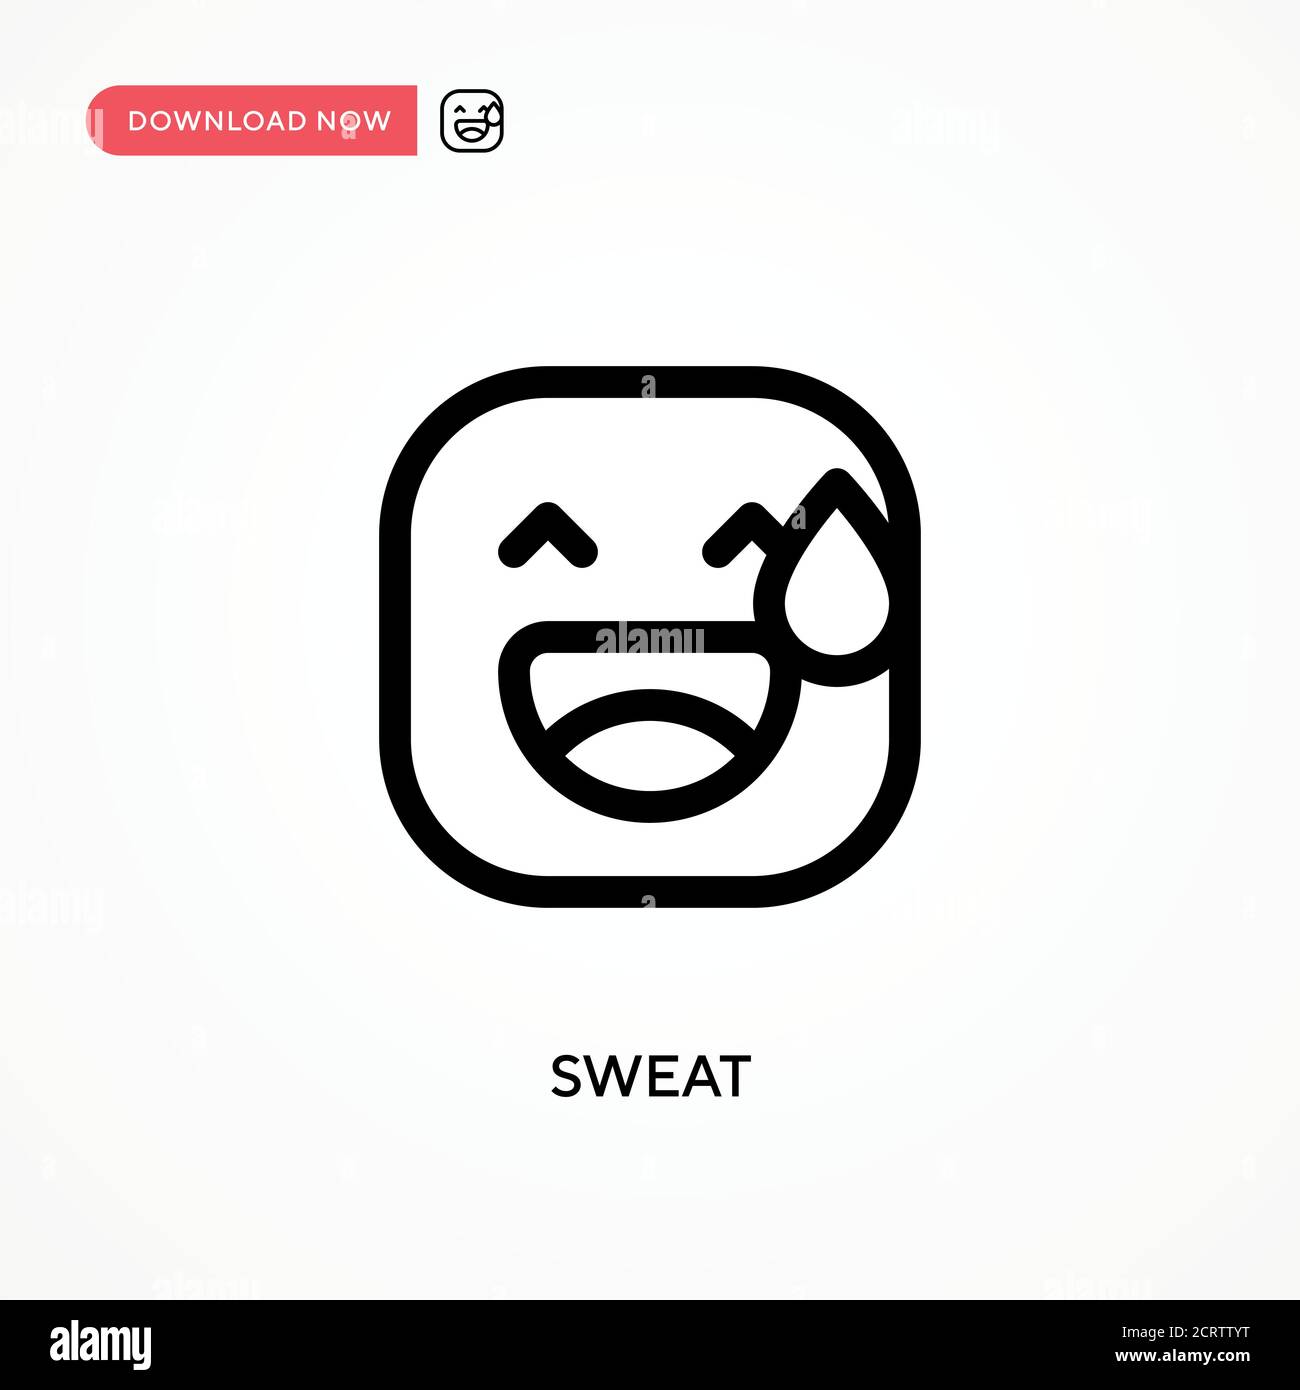 Sweat Simple Vektor-Symbol. Moderne, einfache flache Vektor-Illustration für Website oder mobile App Stock Vektor